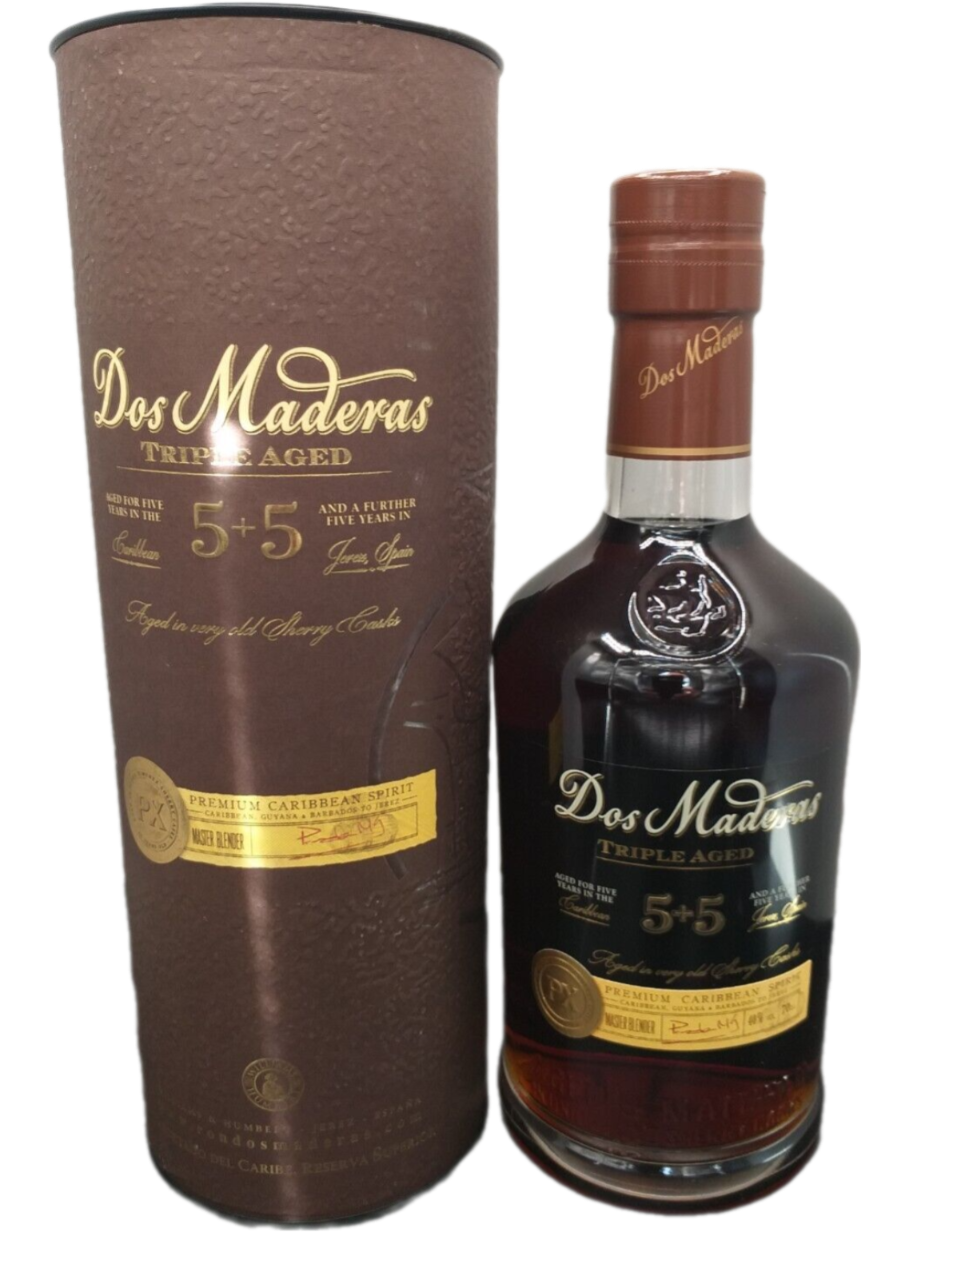 Dos Maderas 5+5 Premium Caribean Spirit Rum 40% VOL. (1x0,7ltr.) OVP